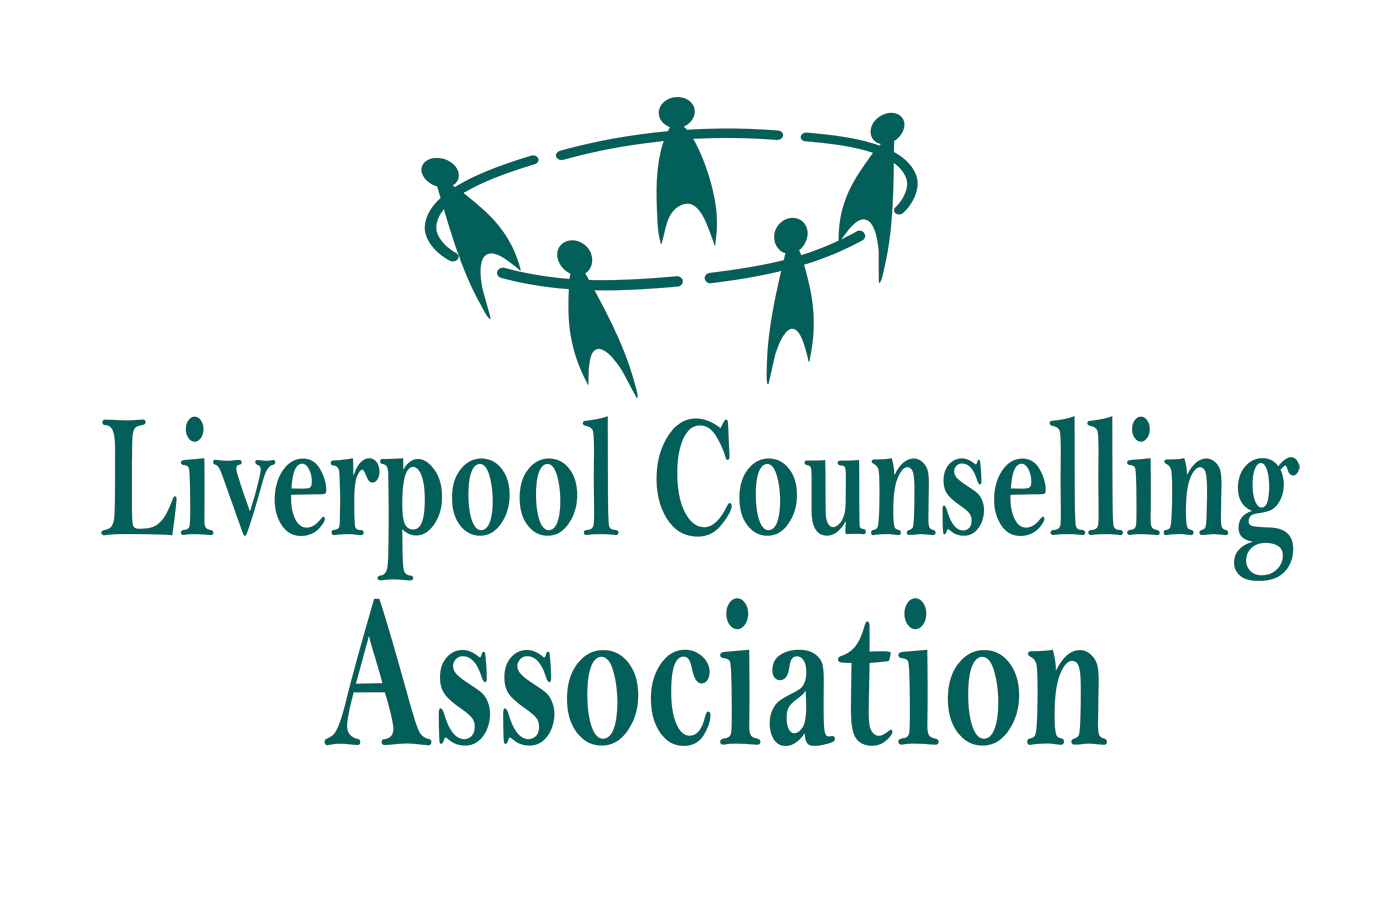 Liverpool-Counselling-Association-logo.jpg